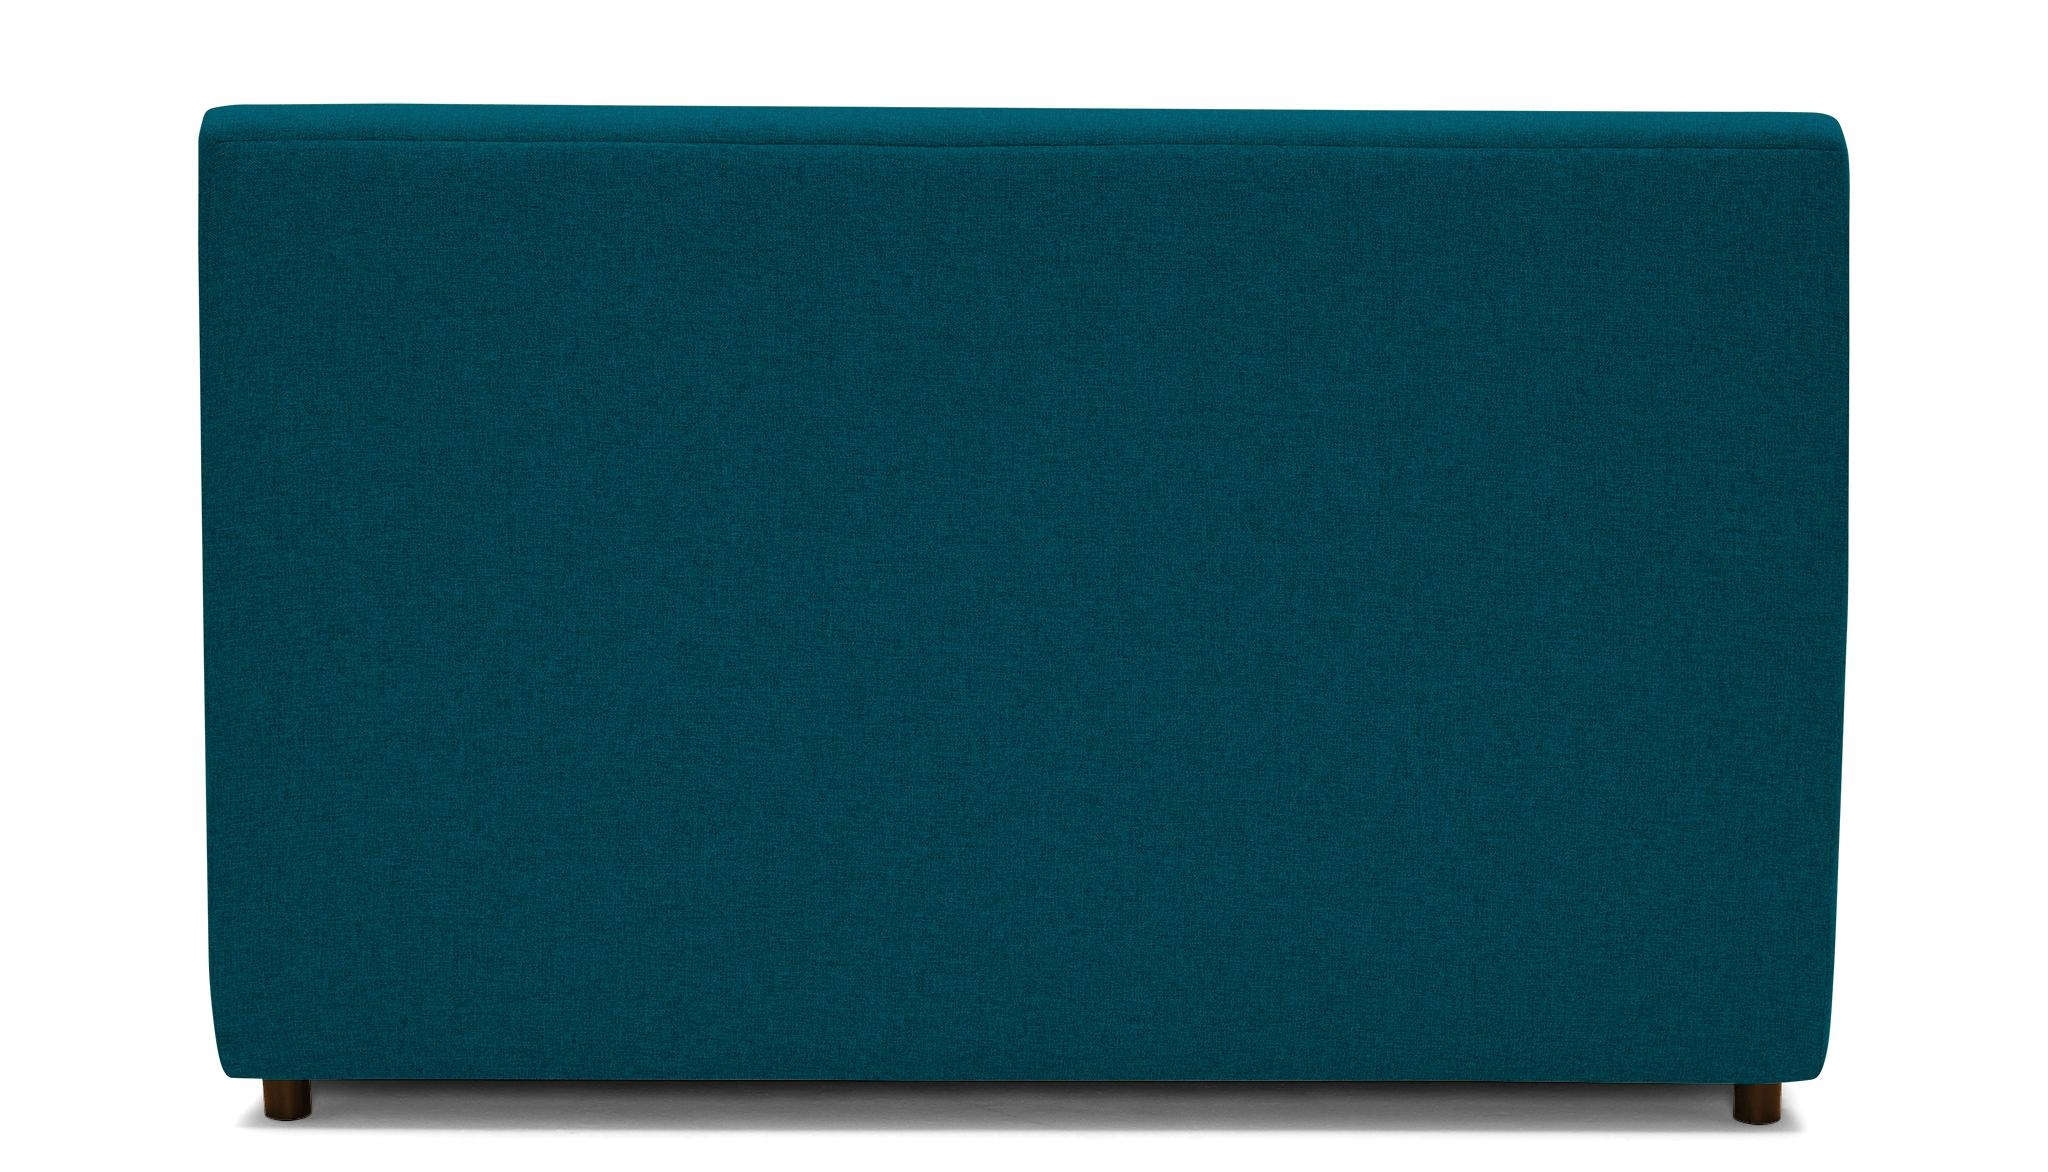 Blue Alvin Mid Century Modern Storage Bed - Key Largo Zenith Teal - Mocha - Queen - Image 4